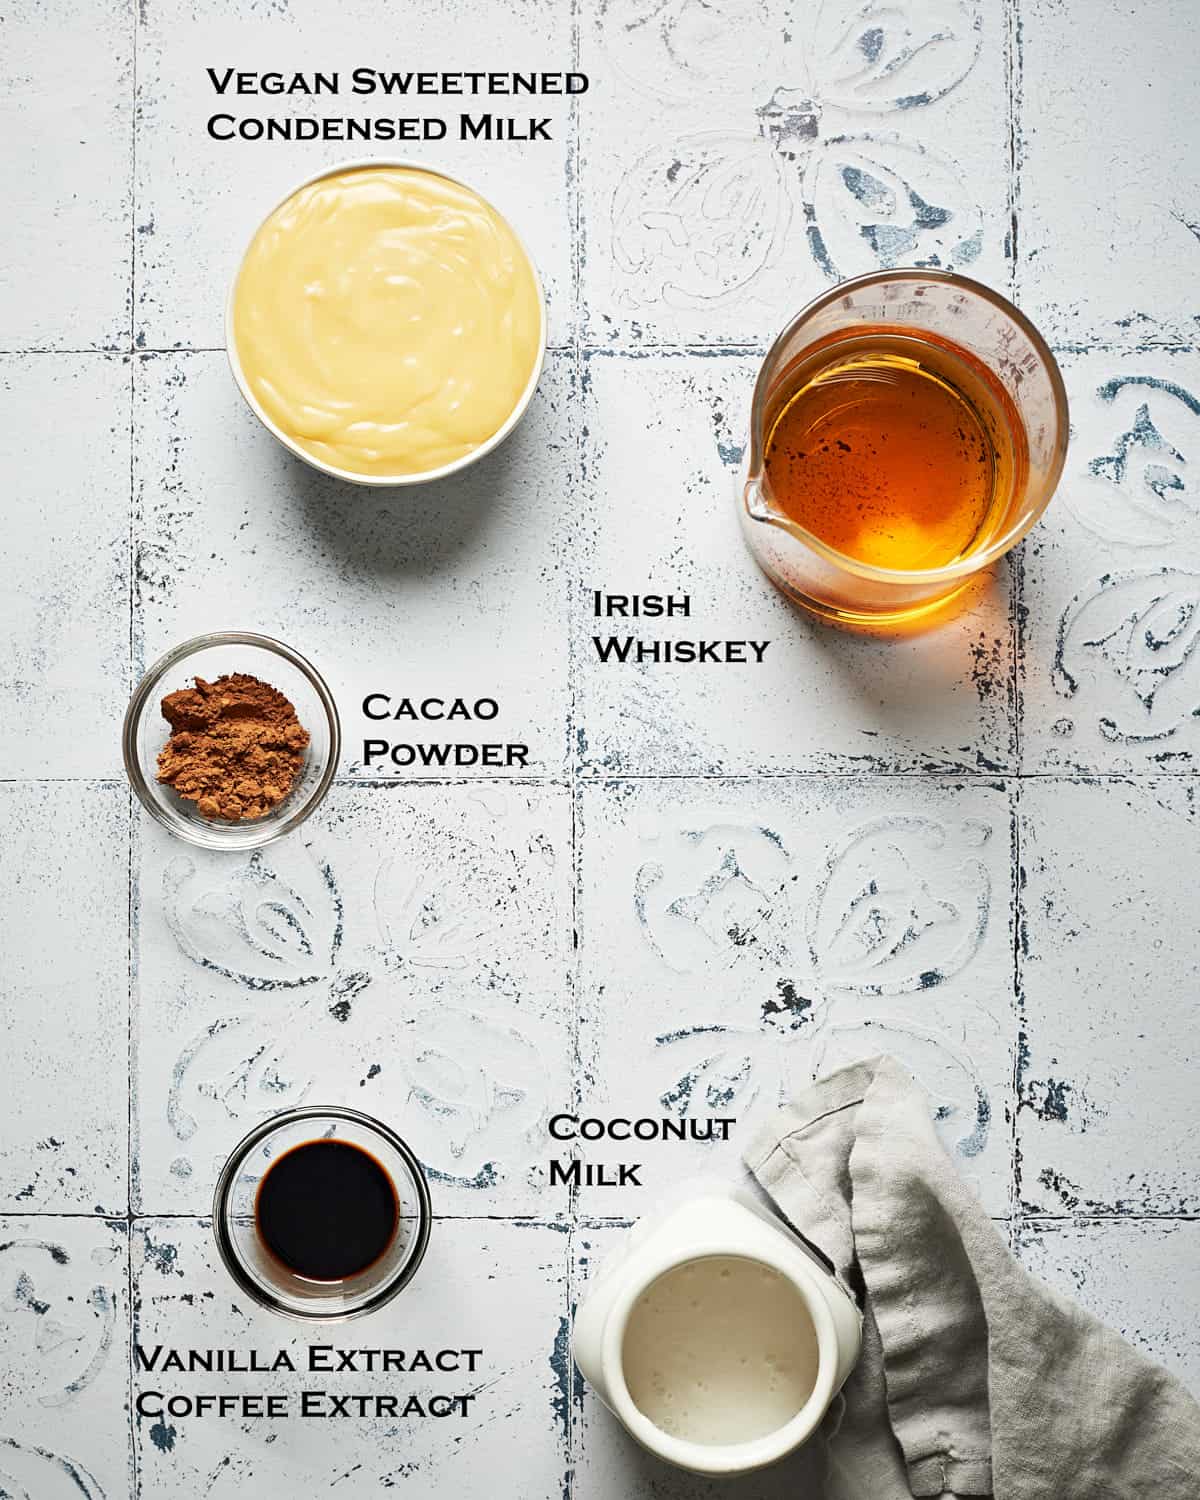 Overhead view of vegan irish cream ingredients on tile surpace with grey napkin.